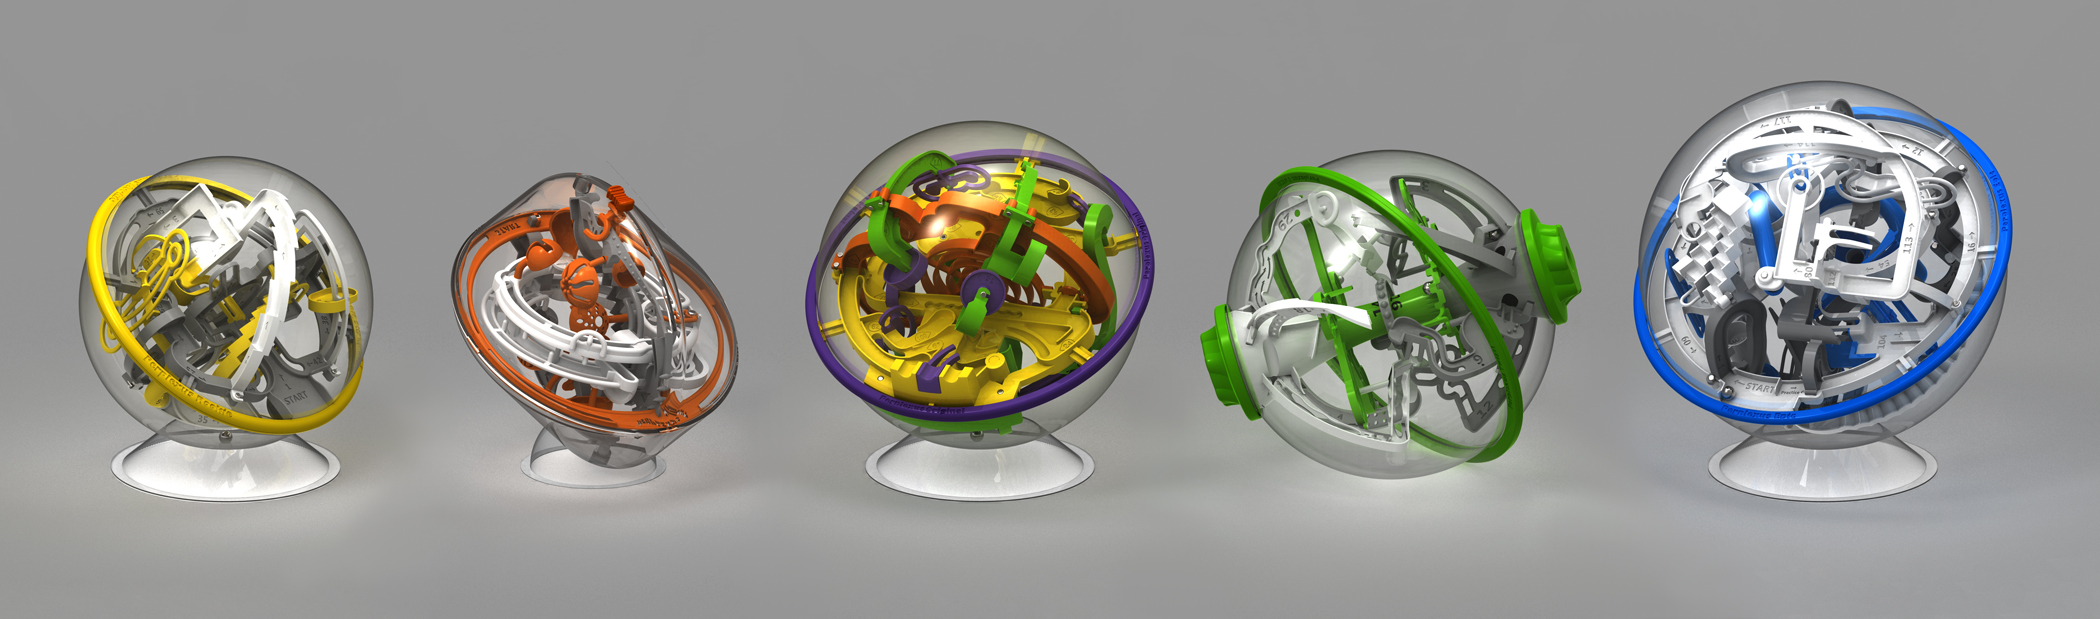 Perplexus: 3D spherical labyrinth - Children's toy